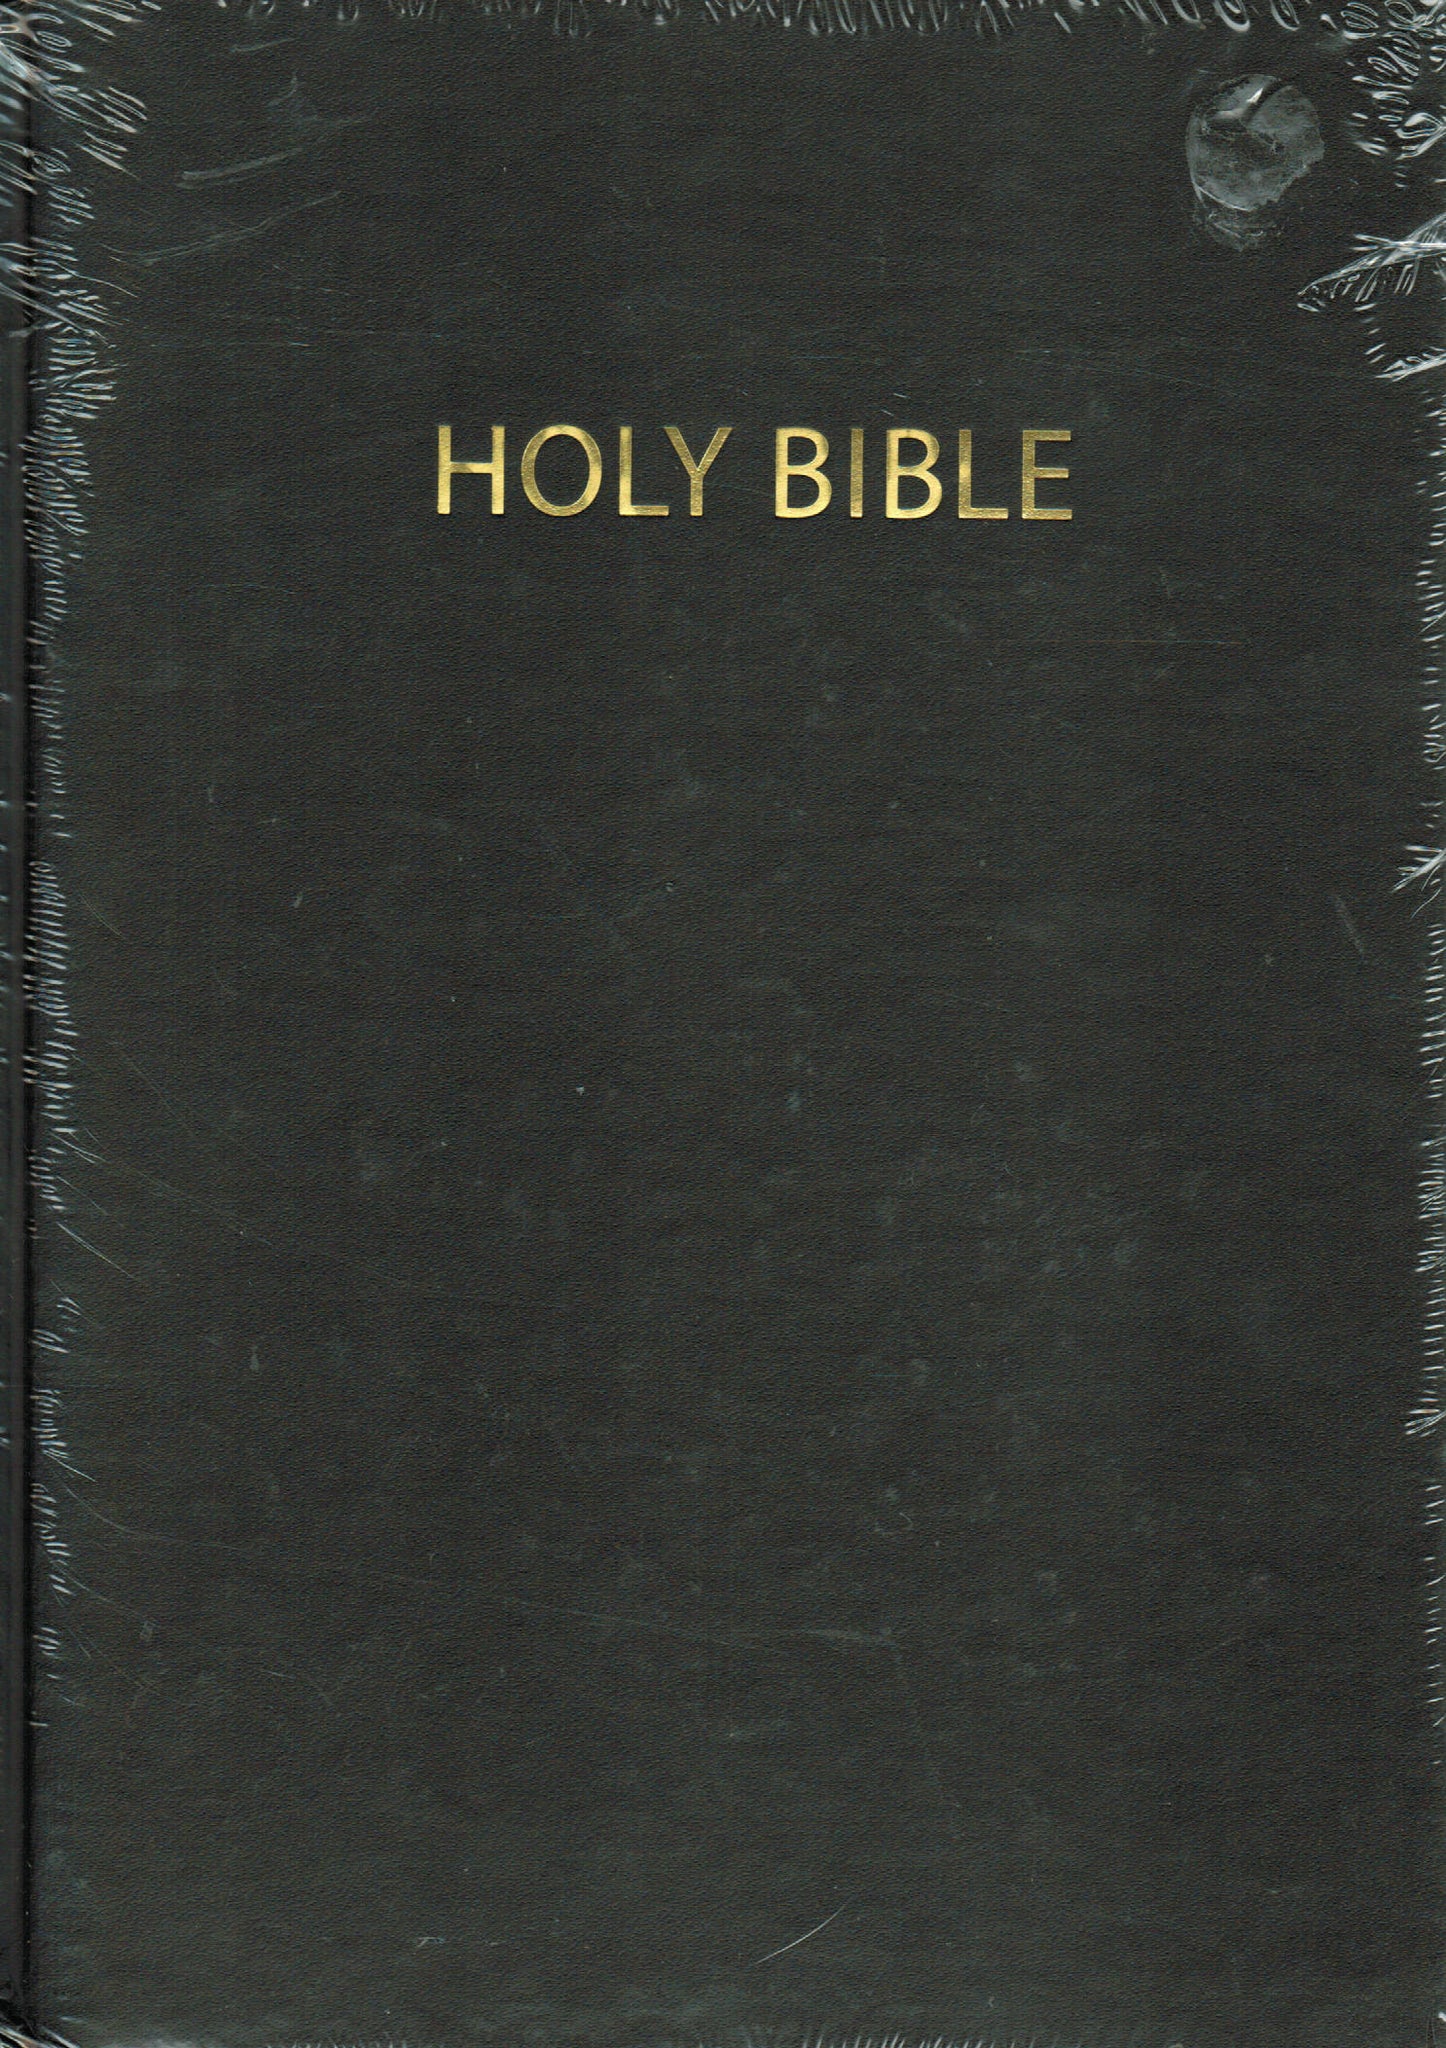 KJV Bible - TBS Extra Large Print  (Hardcover)